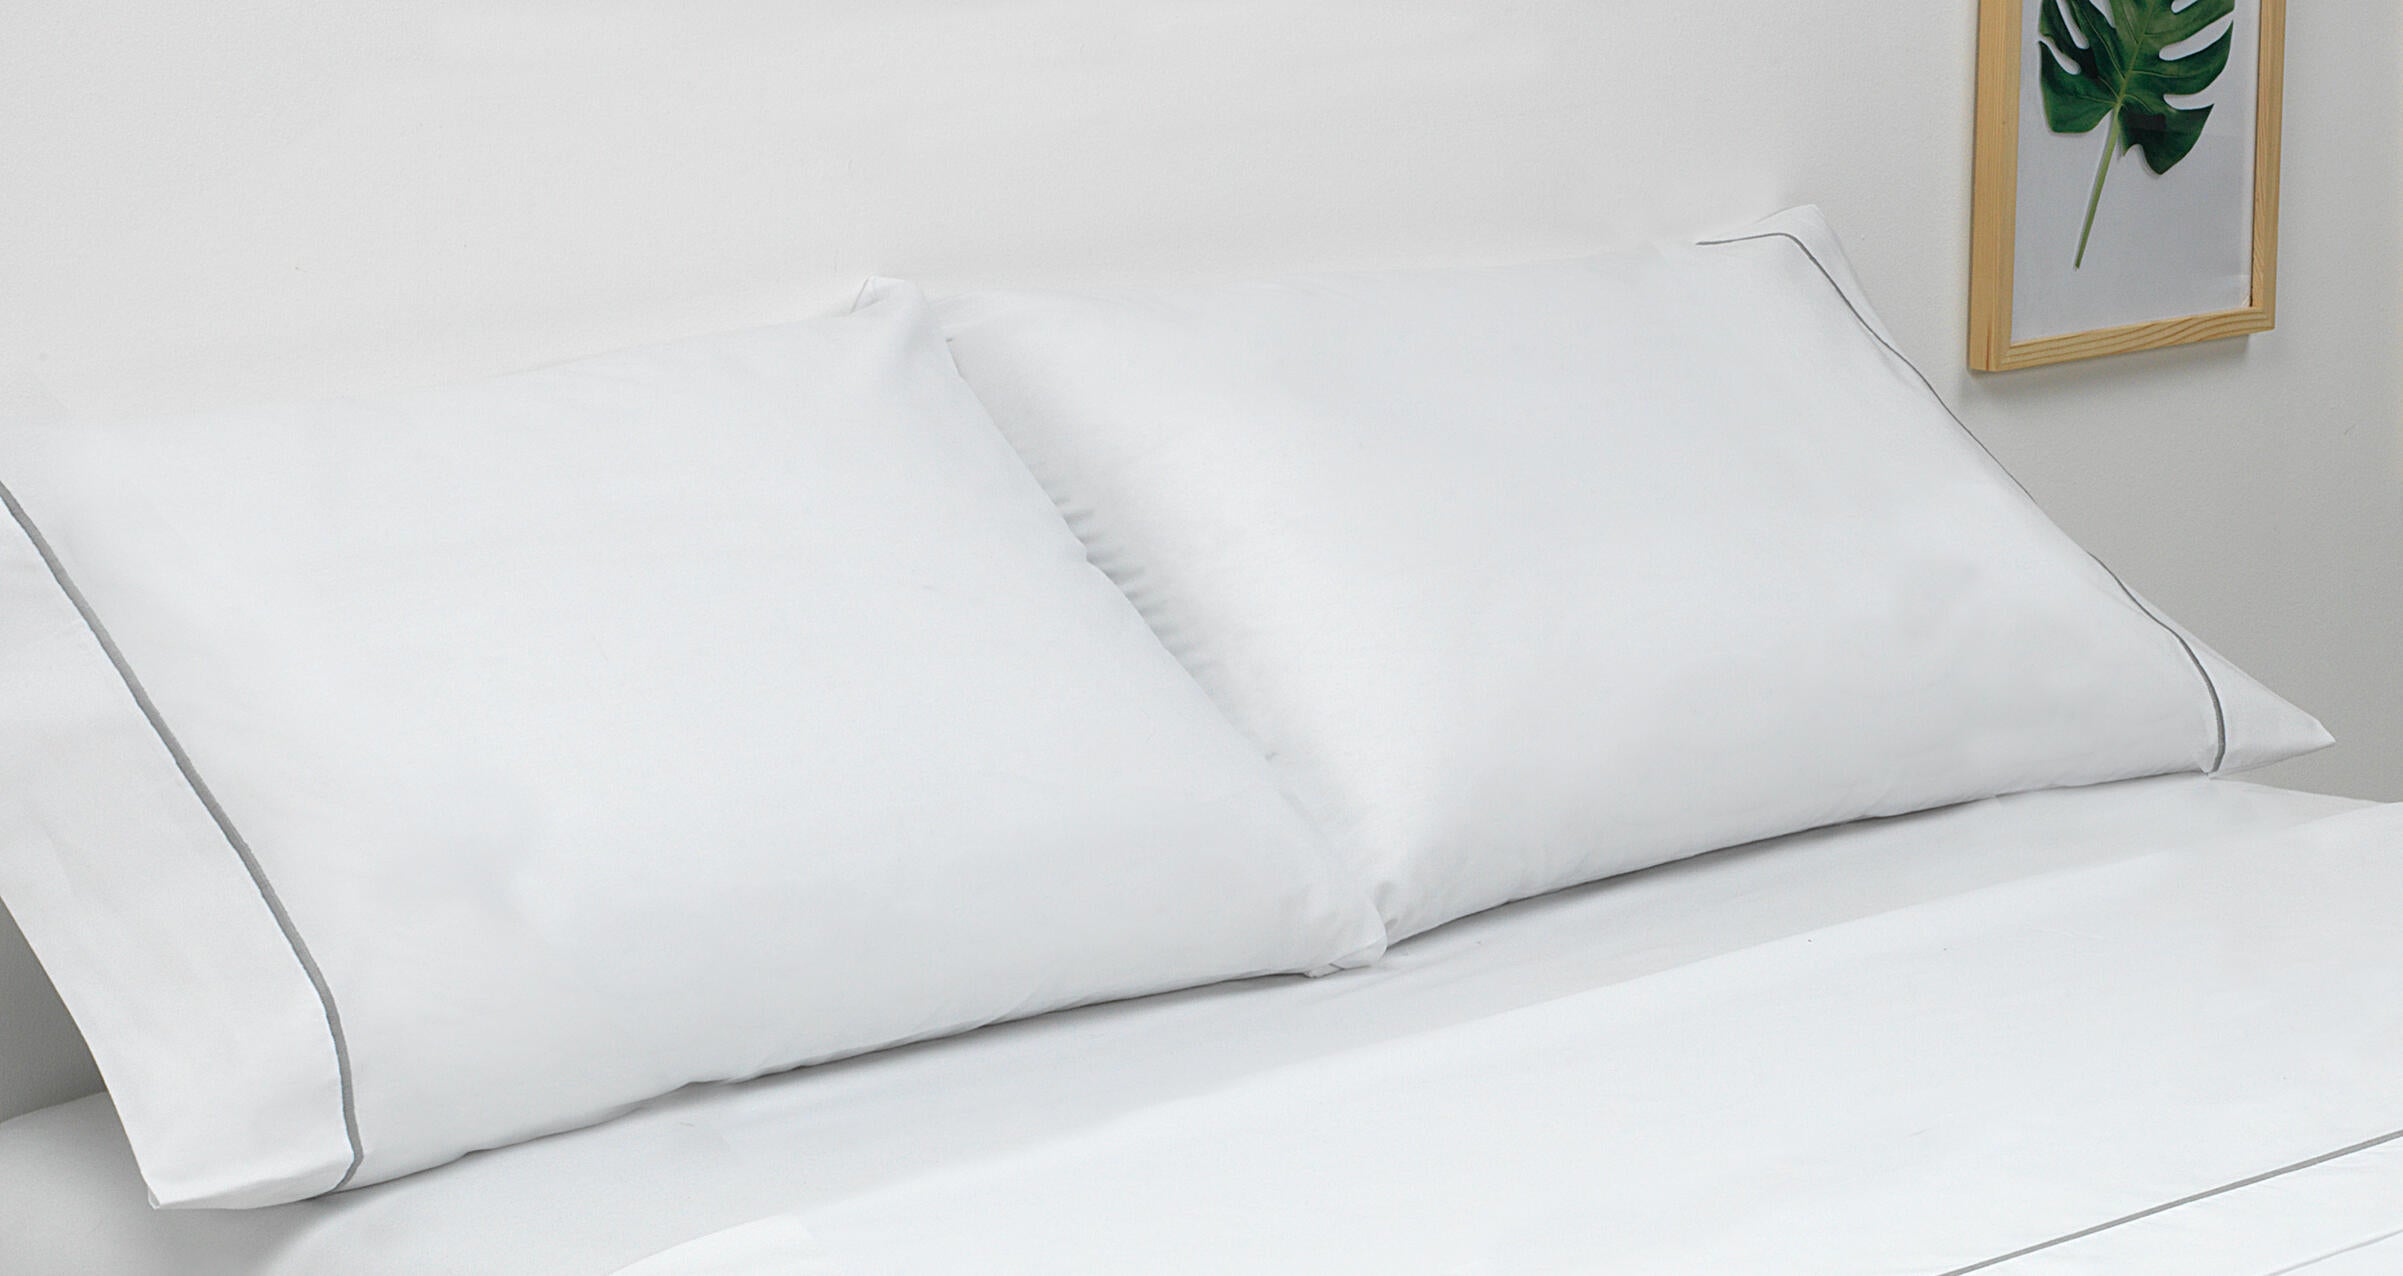 2 Fundas de almohada algodón Bordados Ramas lisa blanco de 200 hilos 45 x  75 cm